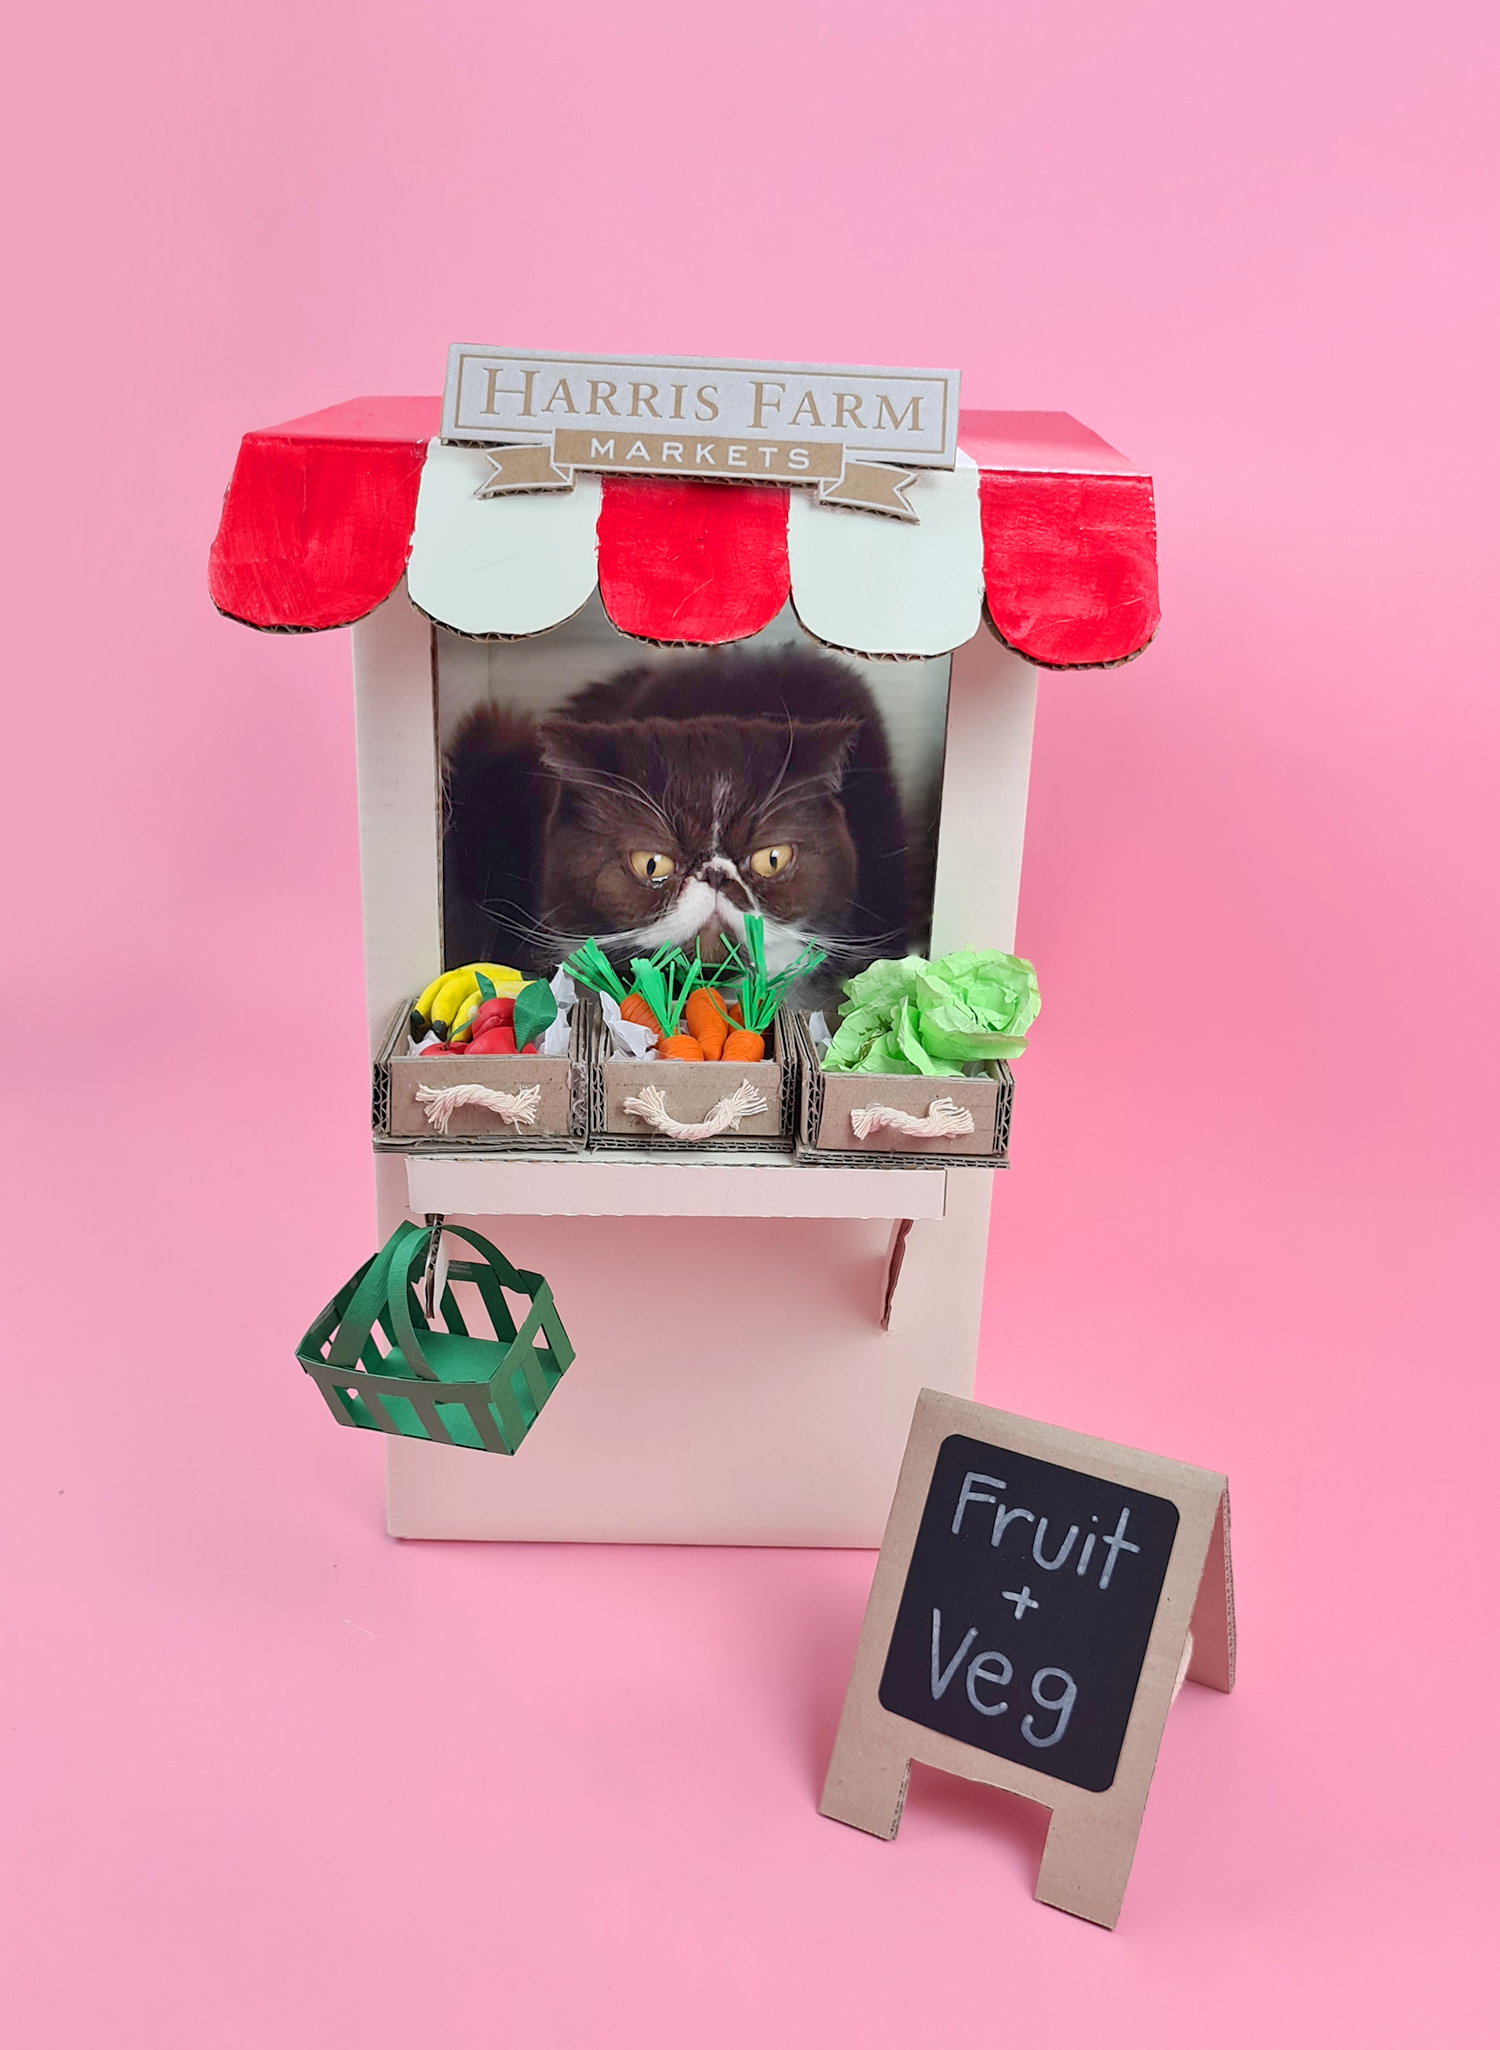 DIY Cardboard Mini Market For Your Pet